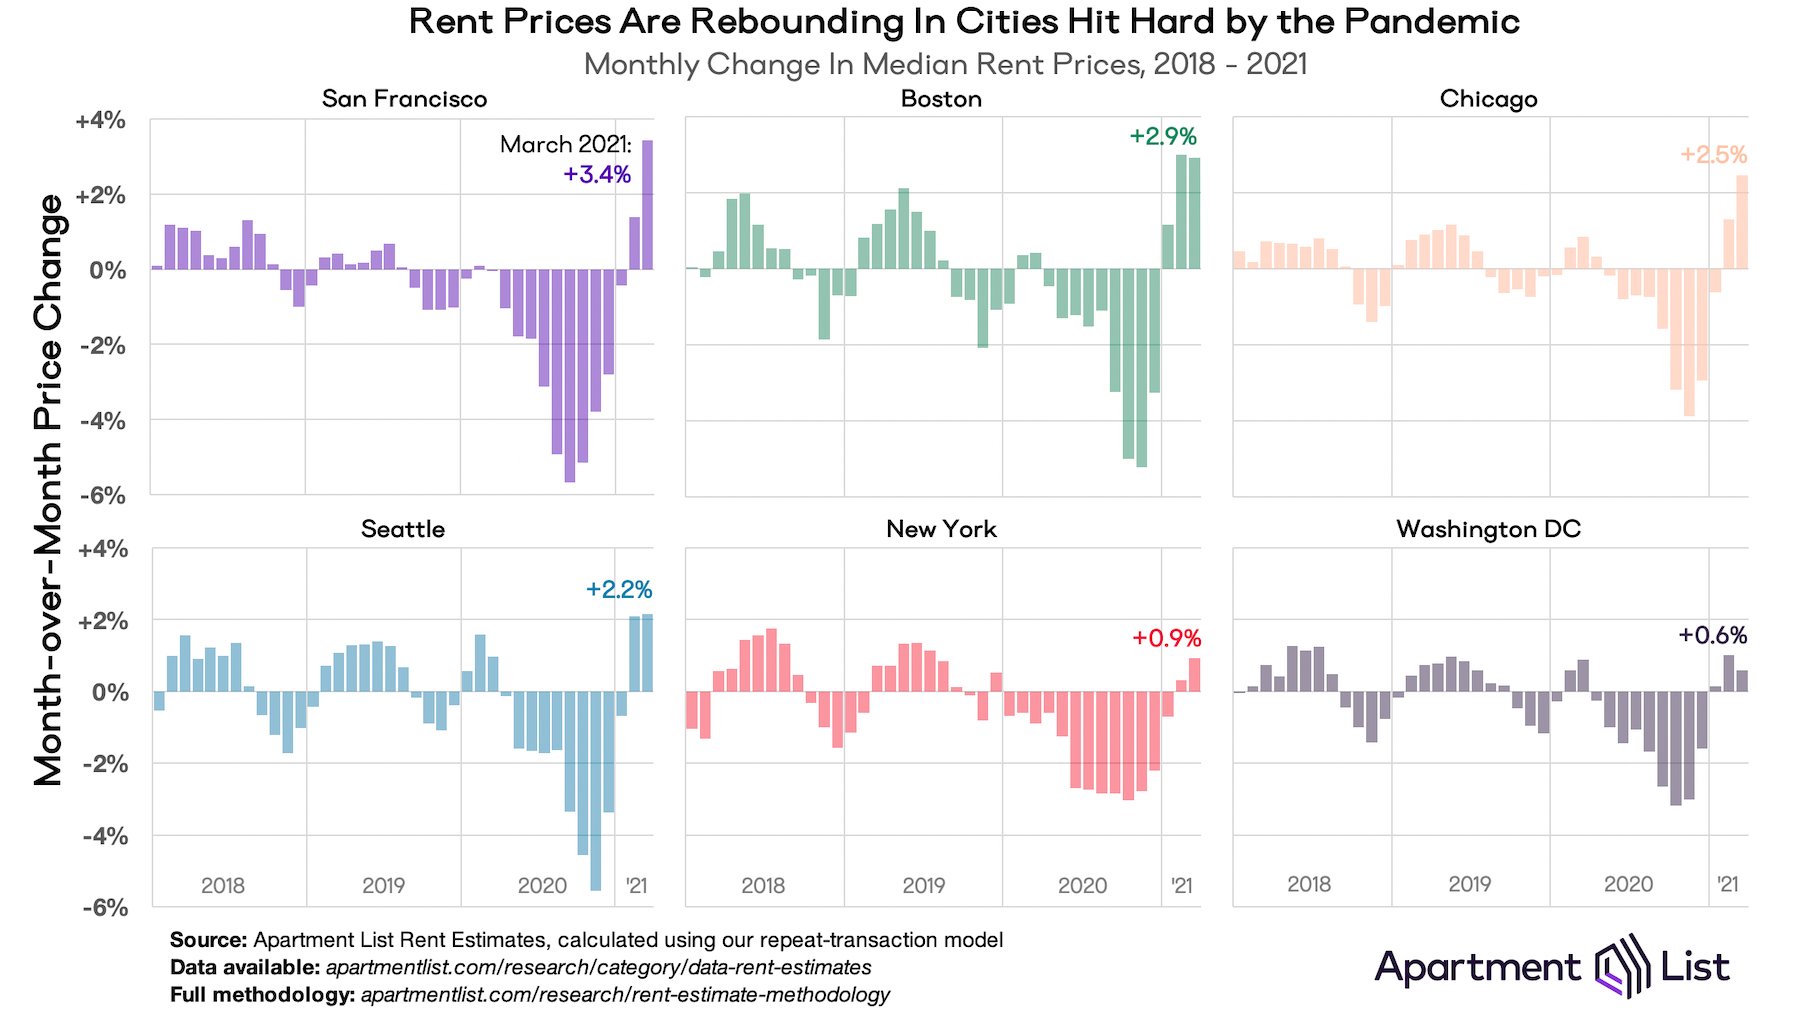 Rent price growth rebounding post pandemic